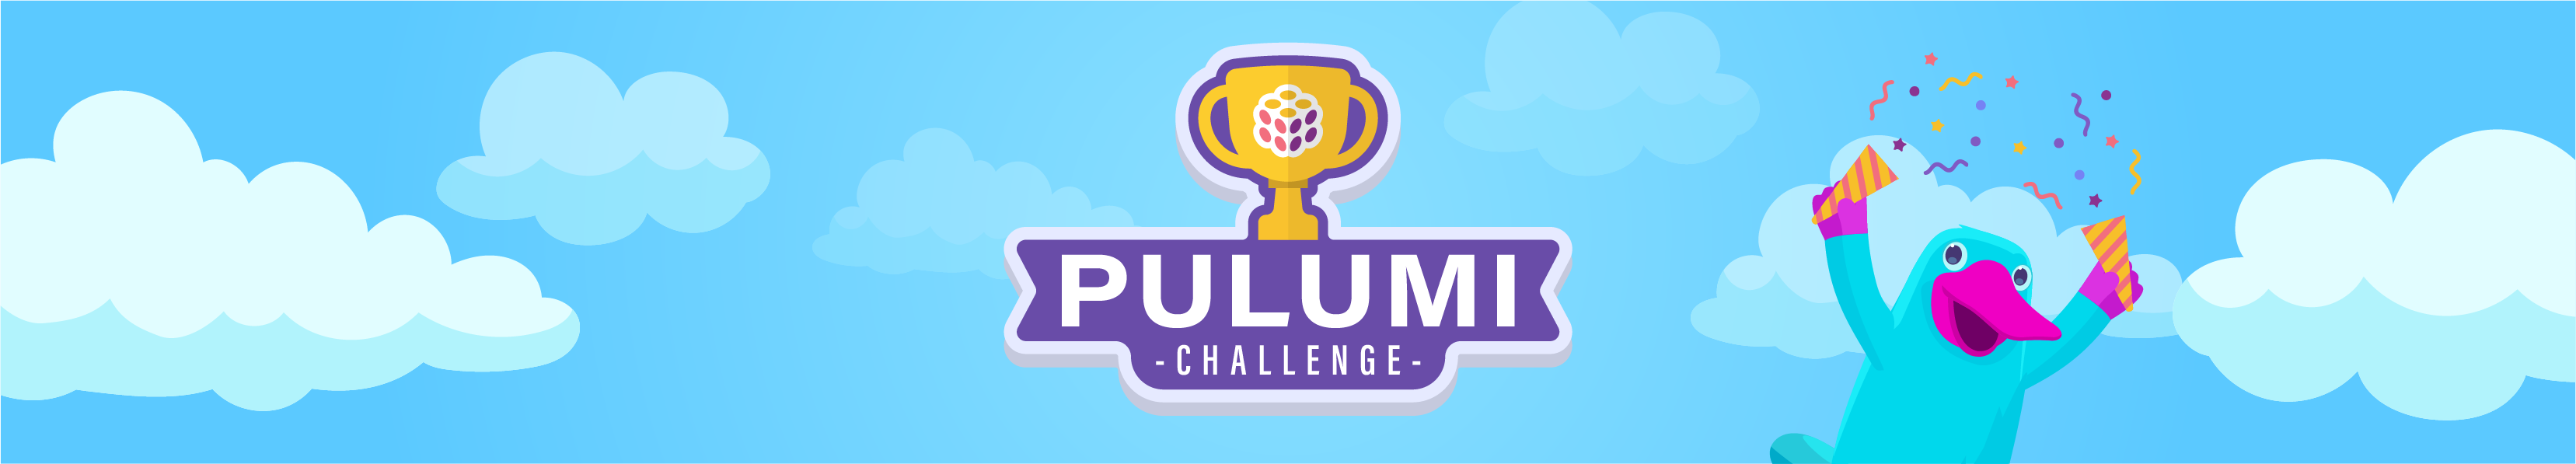 Pulumi Challenge banner image.